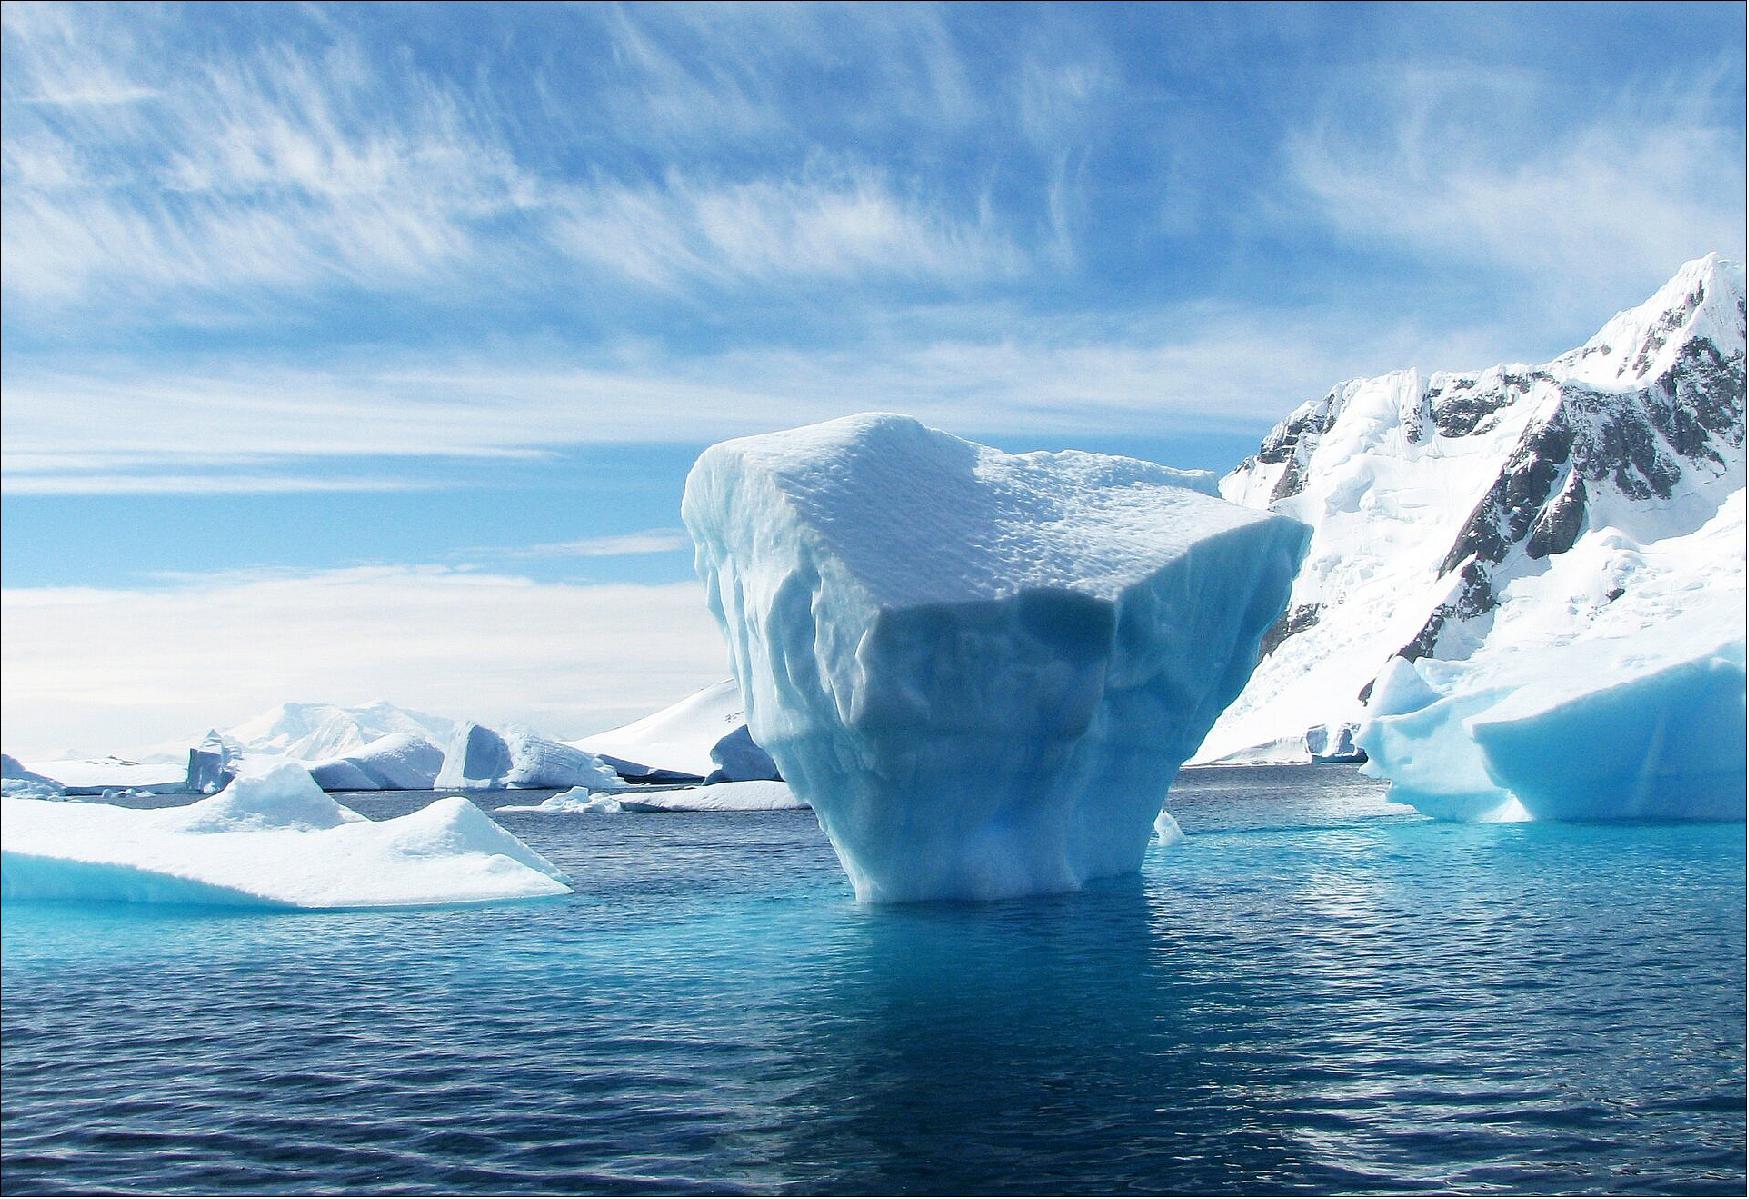 Figure 49: An Iceberg in Antarctica (image credit: Pixabay)